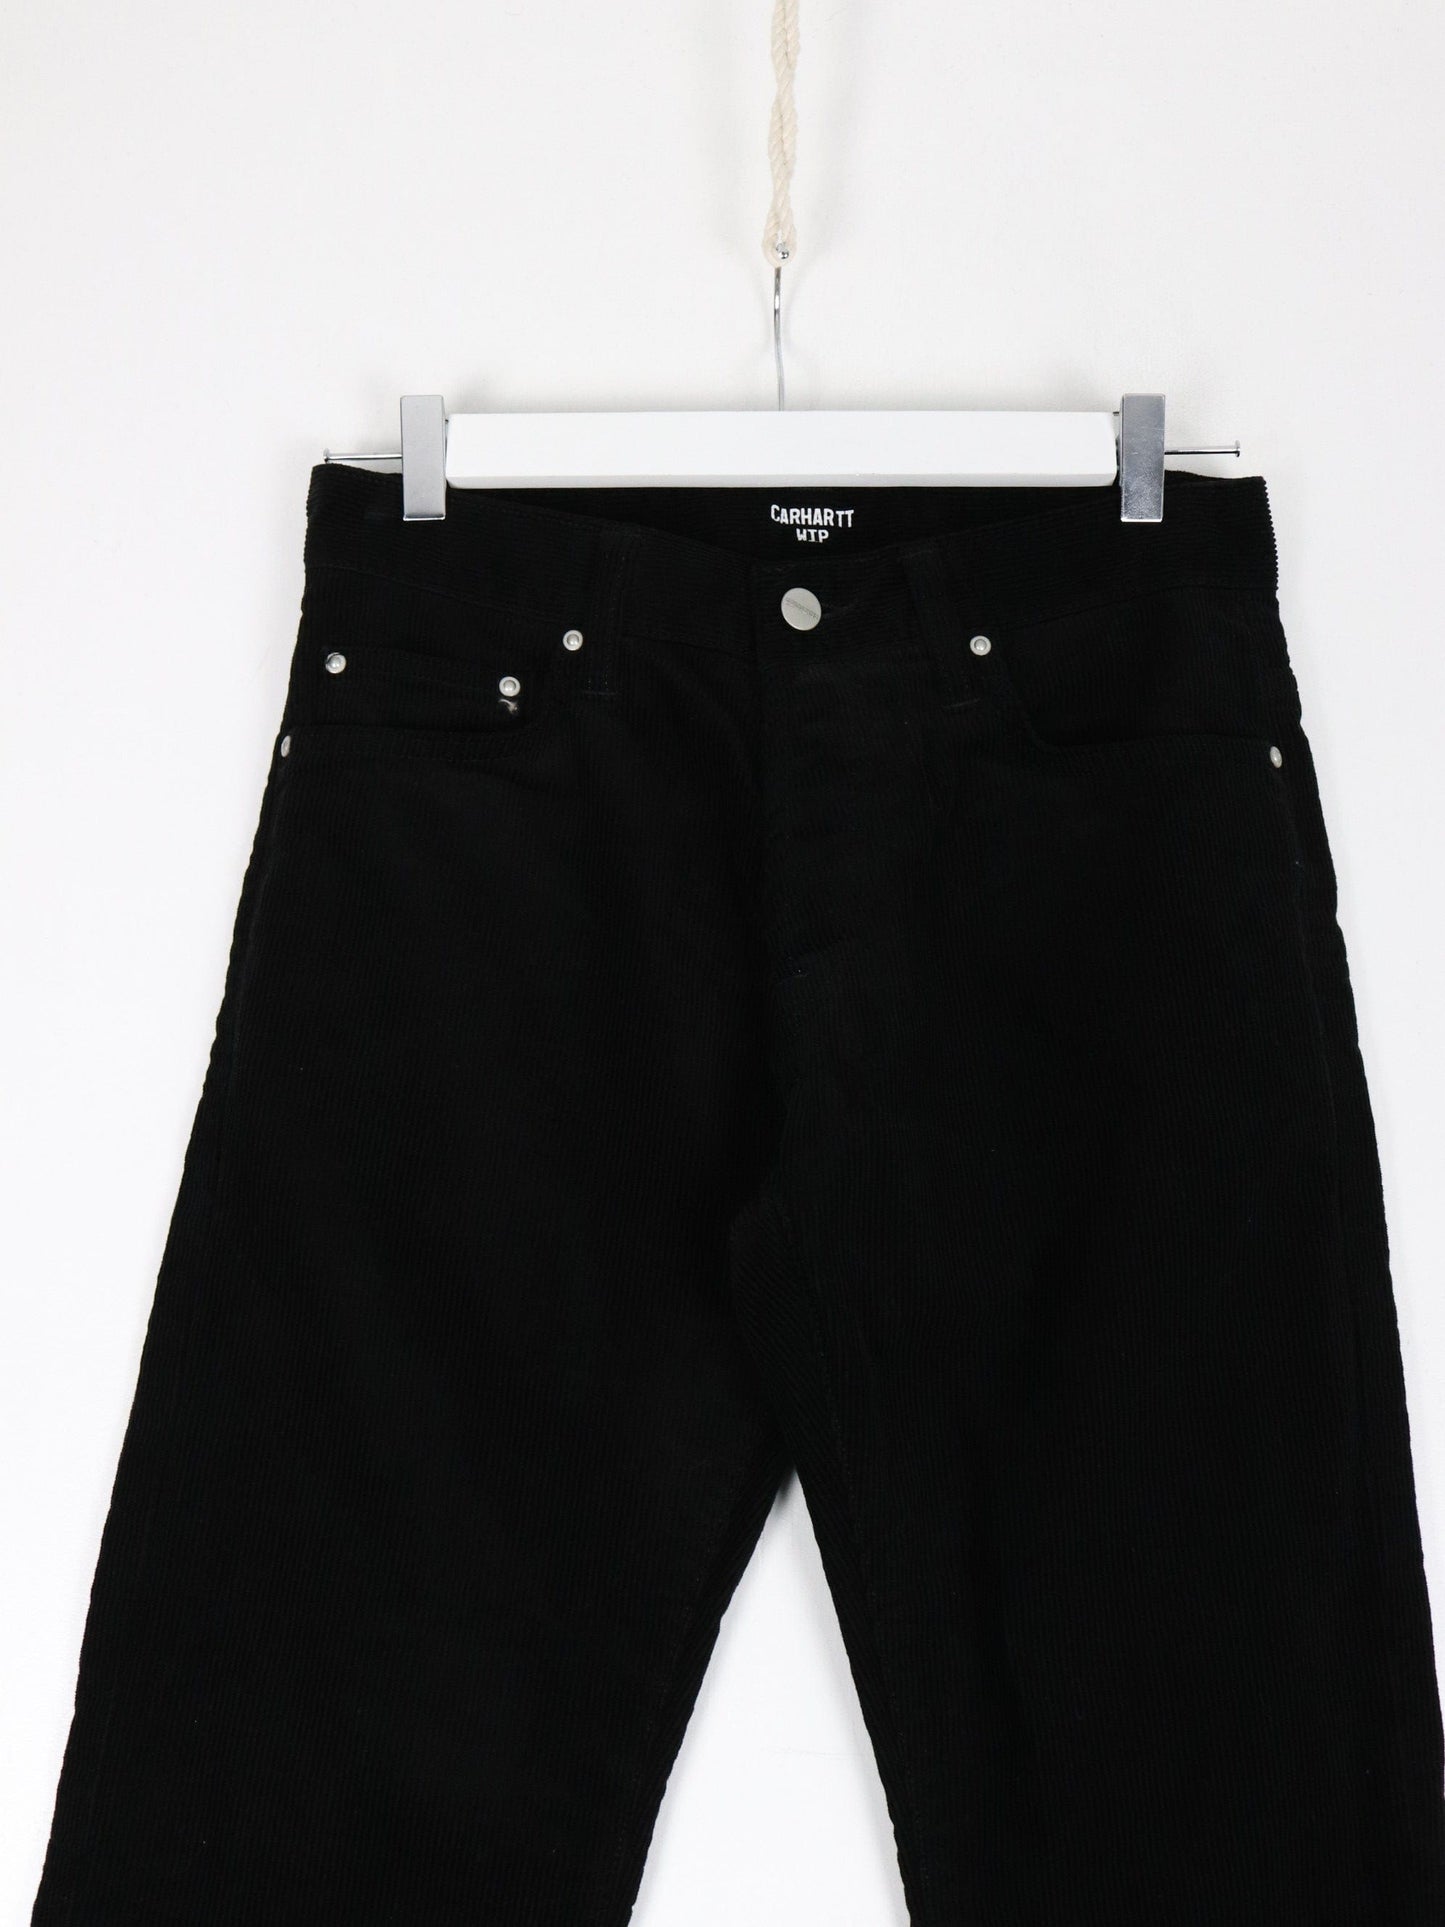 Carhartt Pants Carhartt WIP Pants 28 x 32 Black Corduroy Klondike